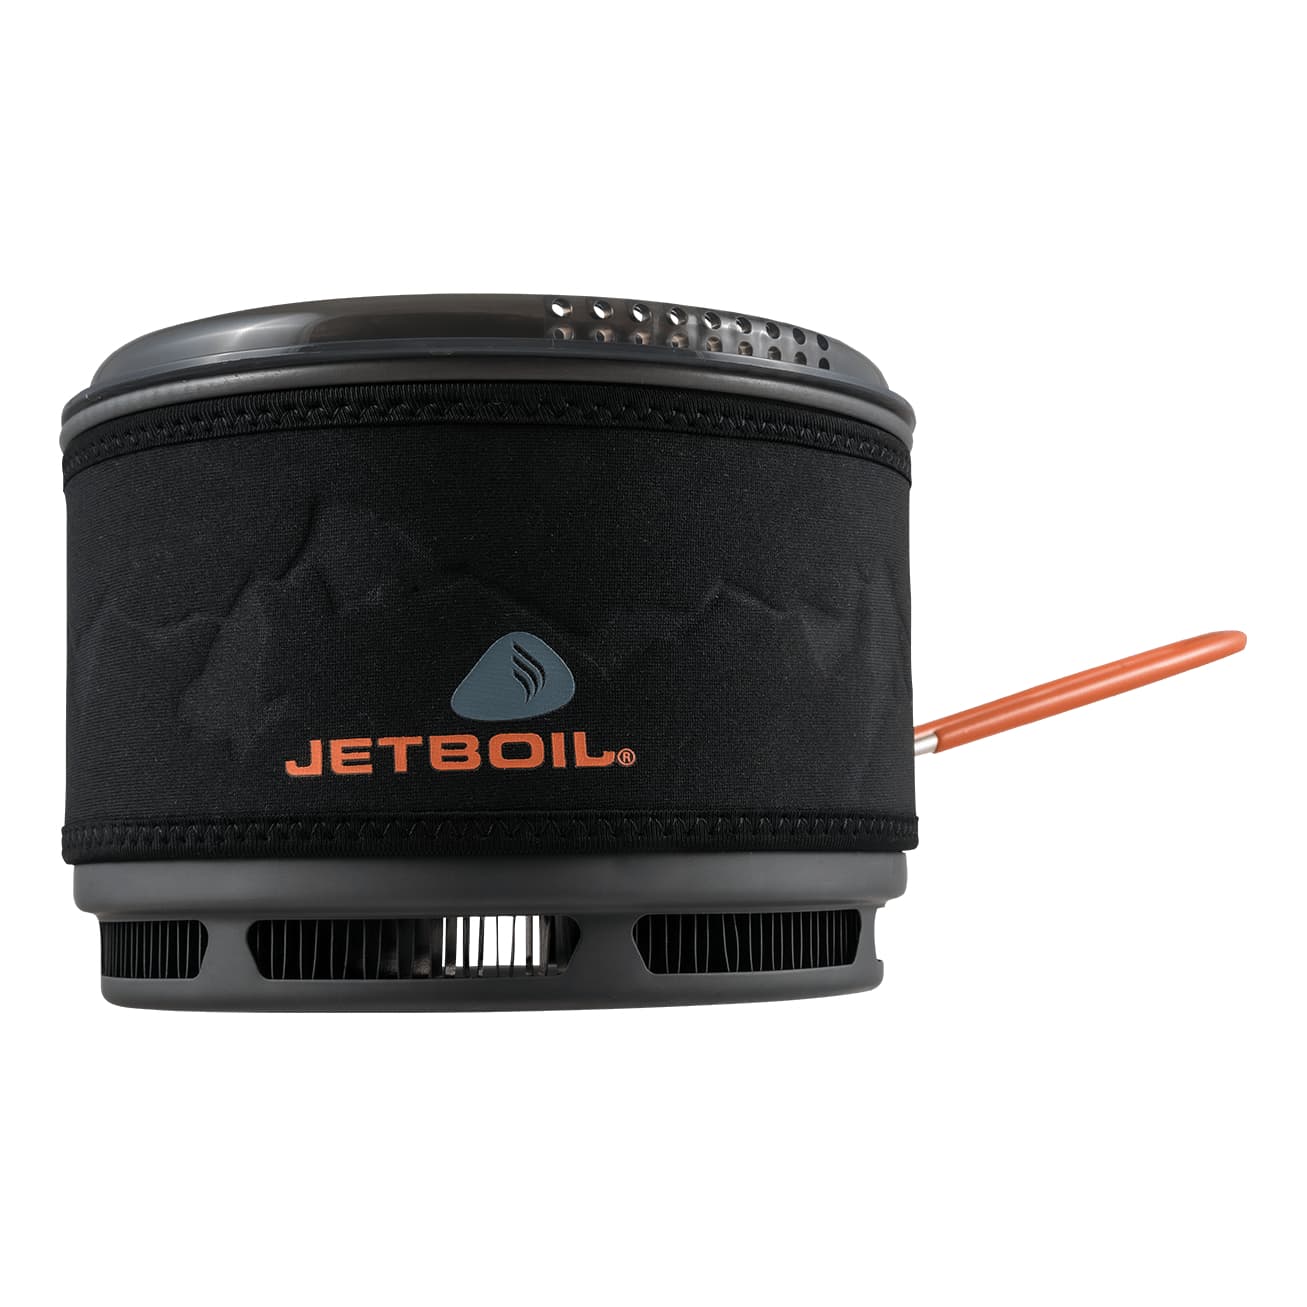 Jetboil® Ceramic 1.5L Pot with FluxRing